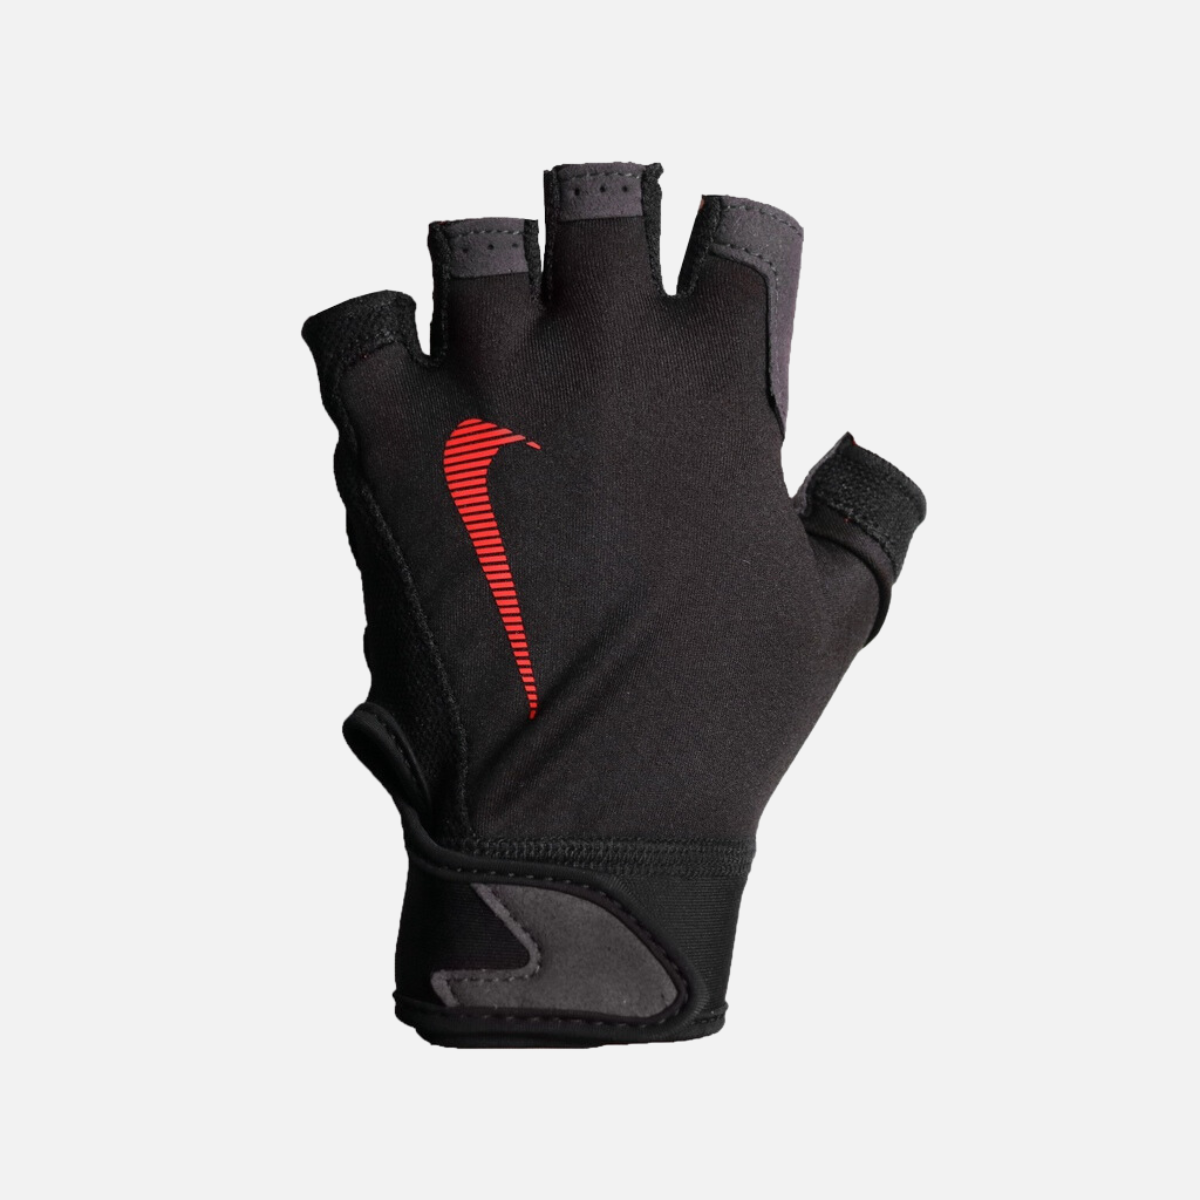 Nike Sports Gloves Ultimate Heavyweight -Black/crimson